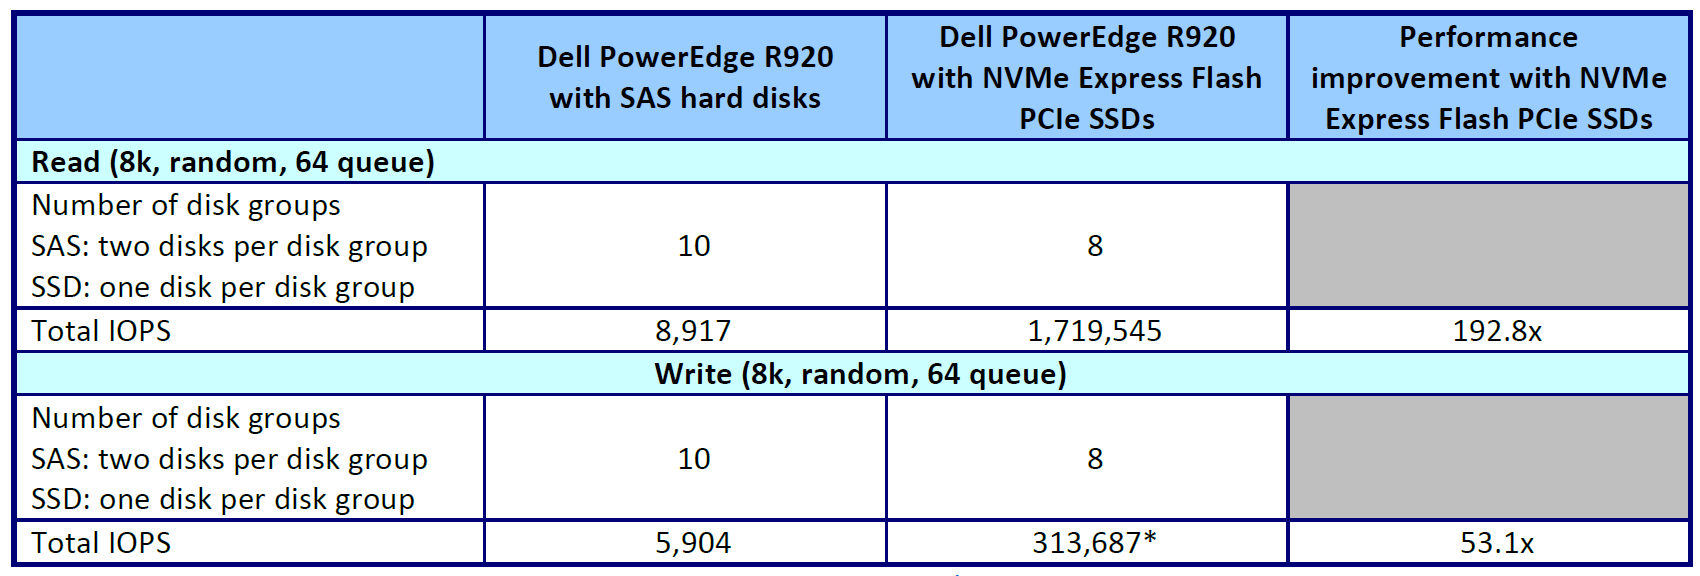 Преимущество новой конфигурации DELL PE R920 c SSDs на NVME EXPRESS FLASH PCIE